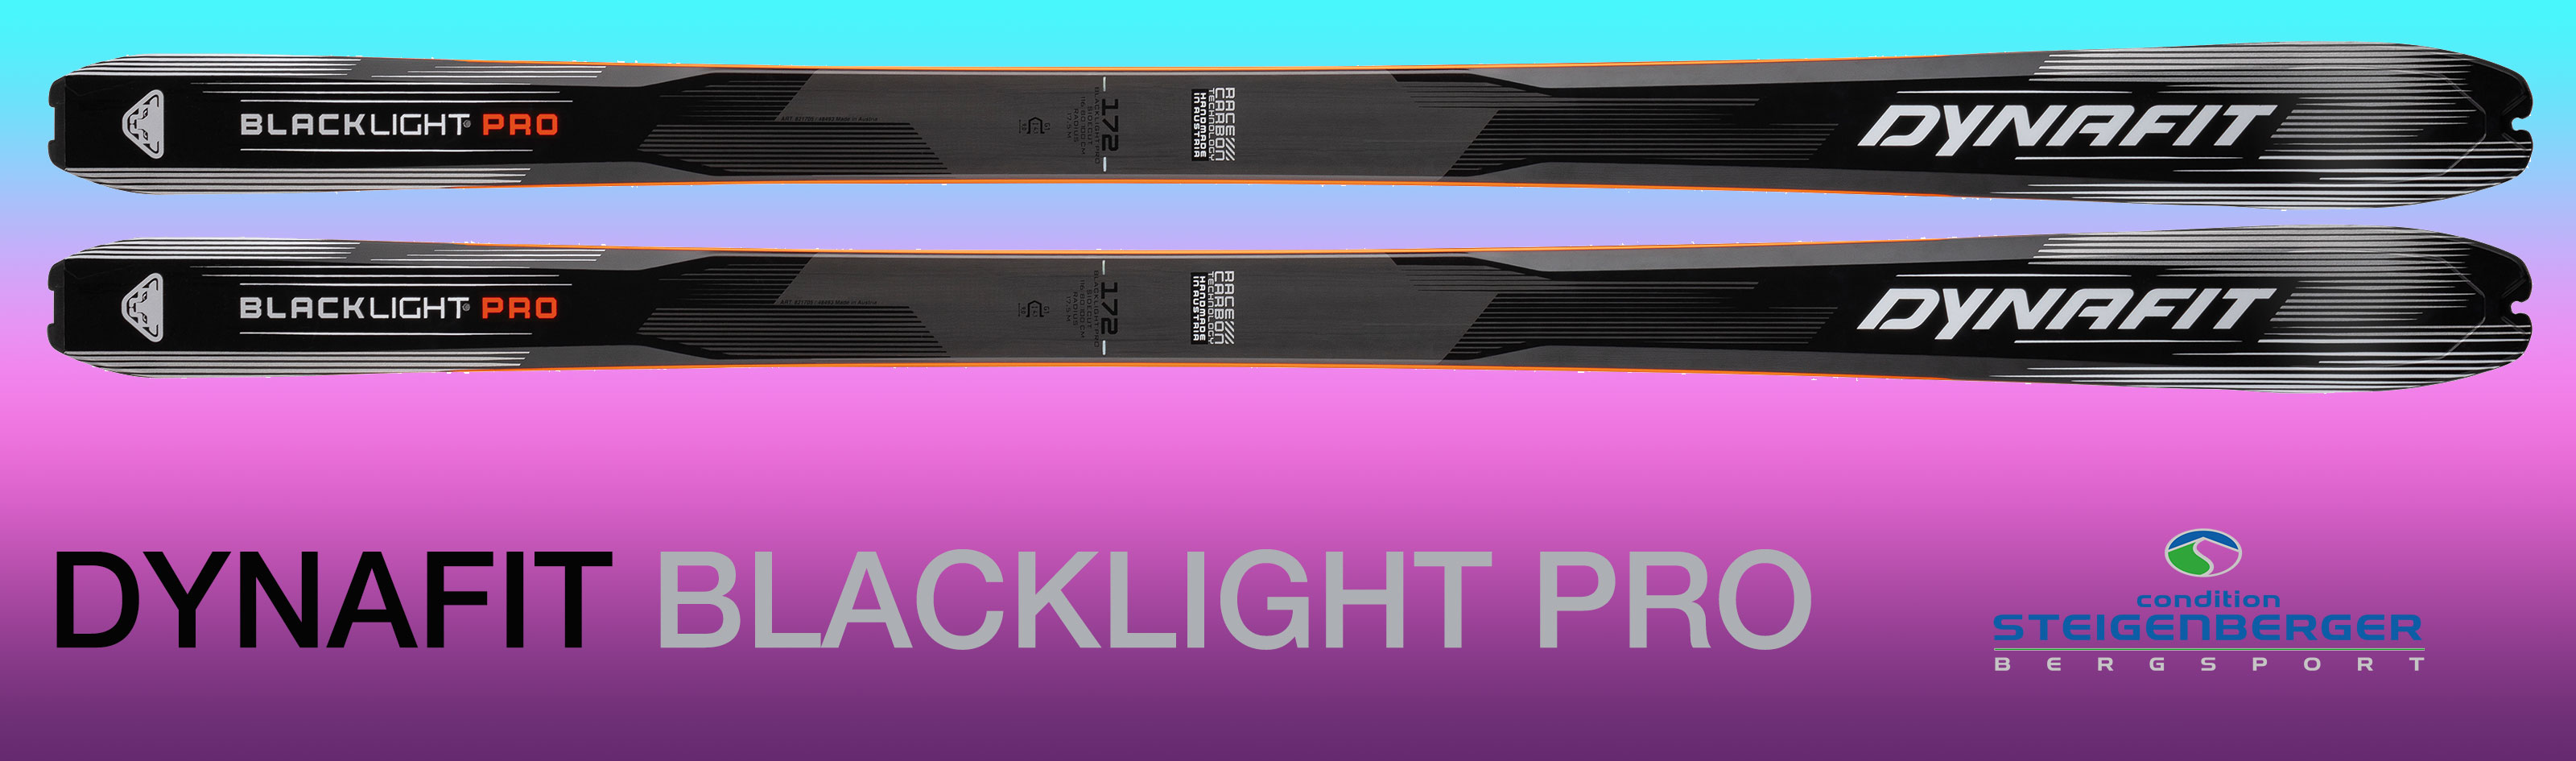 Dynafit Blacklight Pro